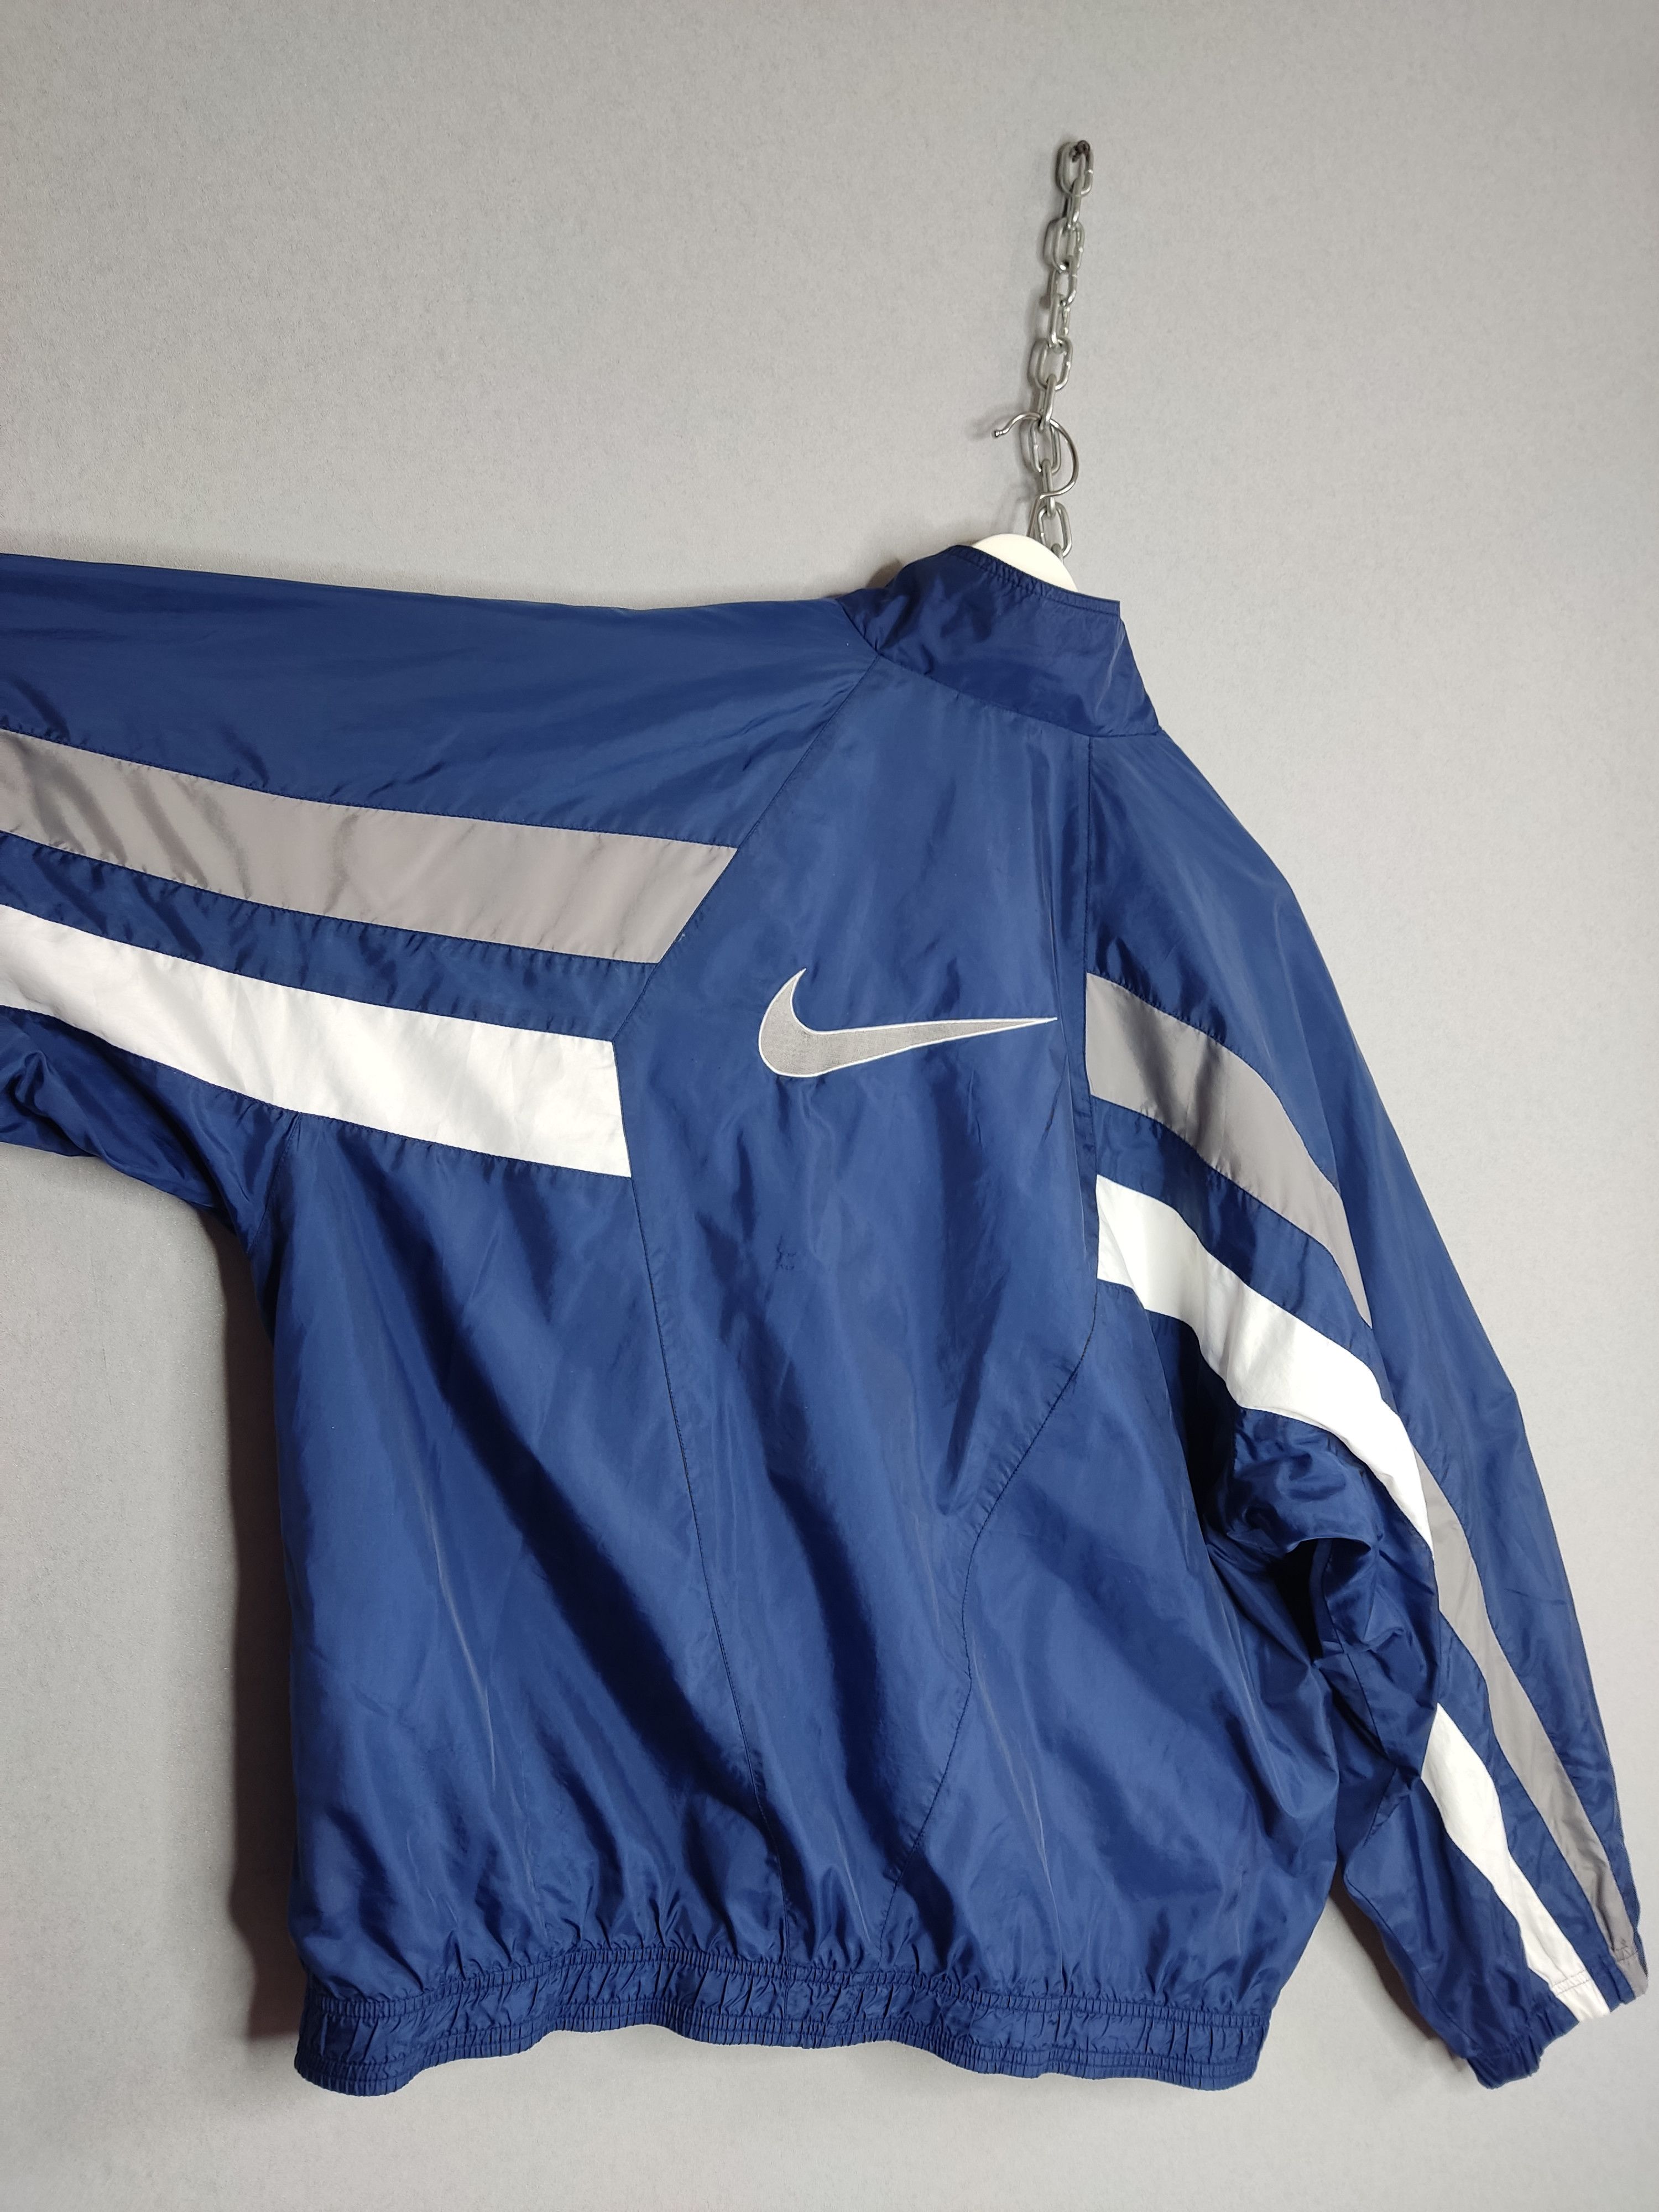 Nike Nike Vintage suit Jacket embroidered logo | Grailed